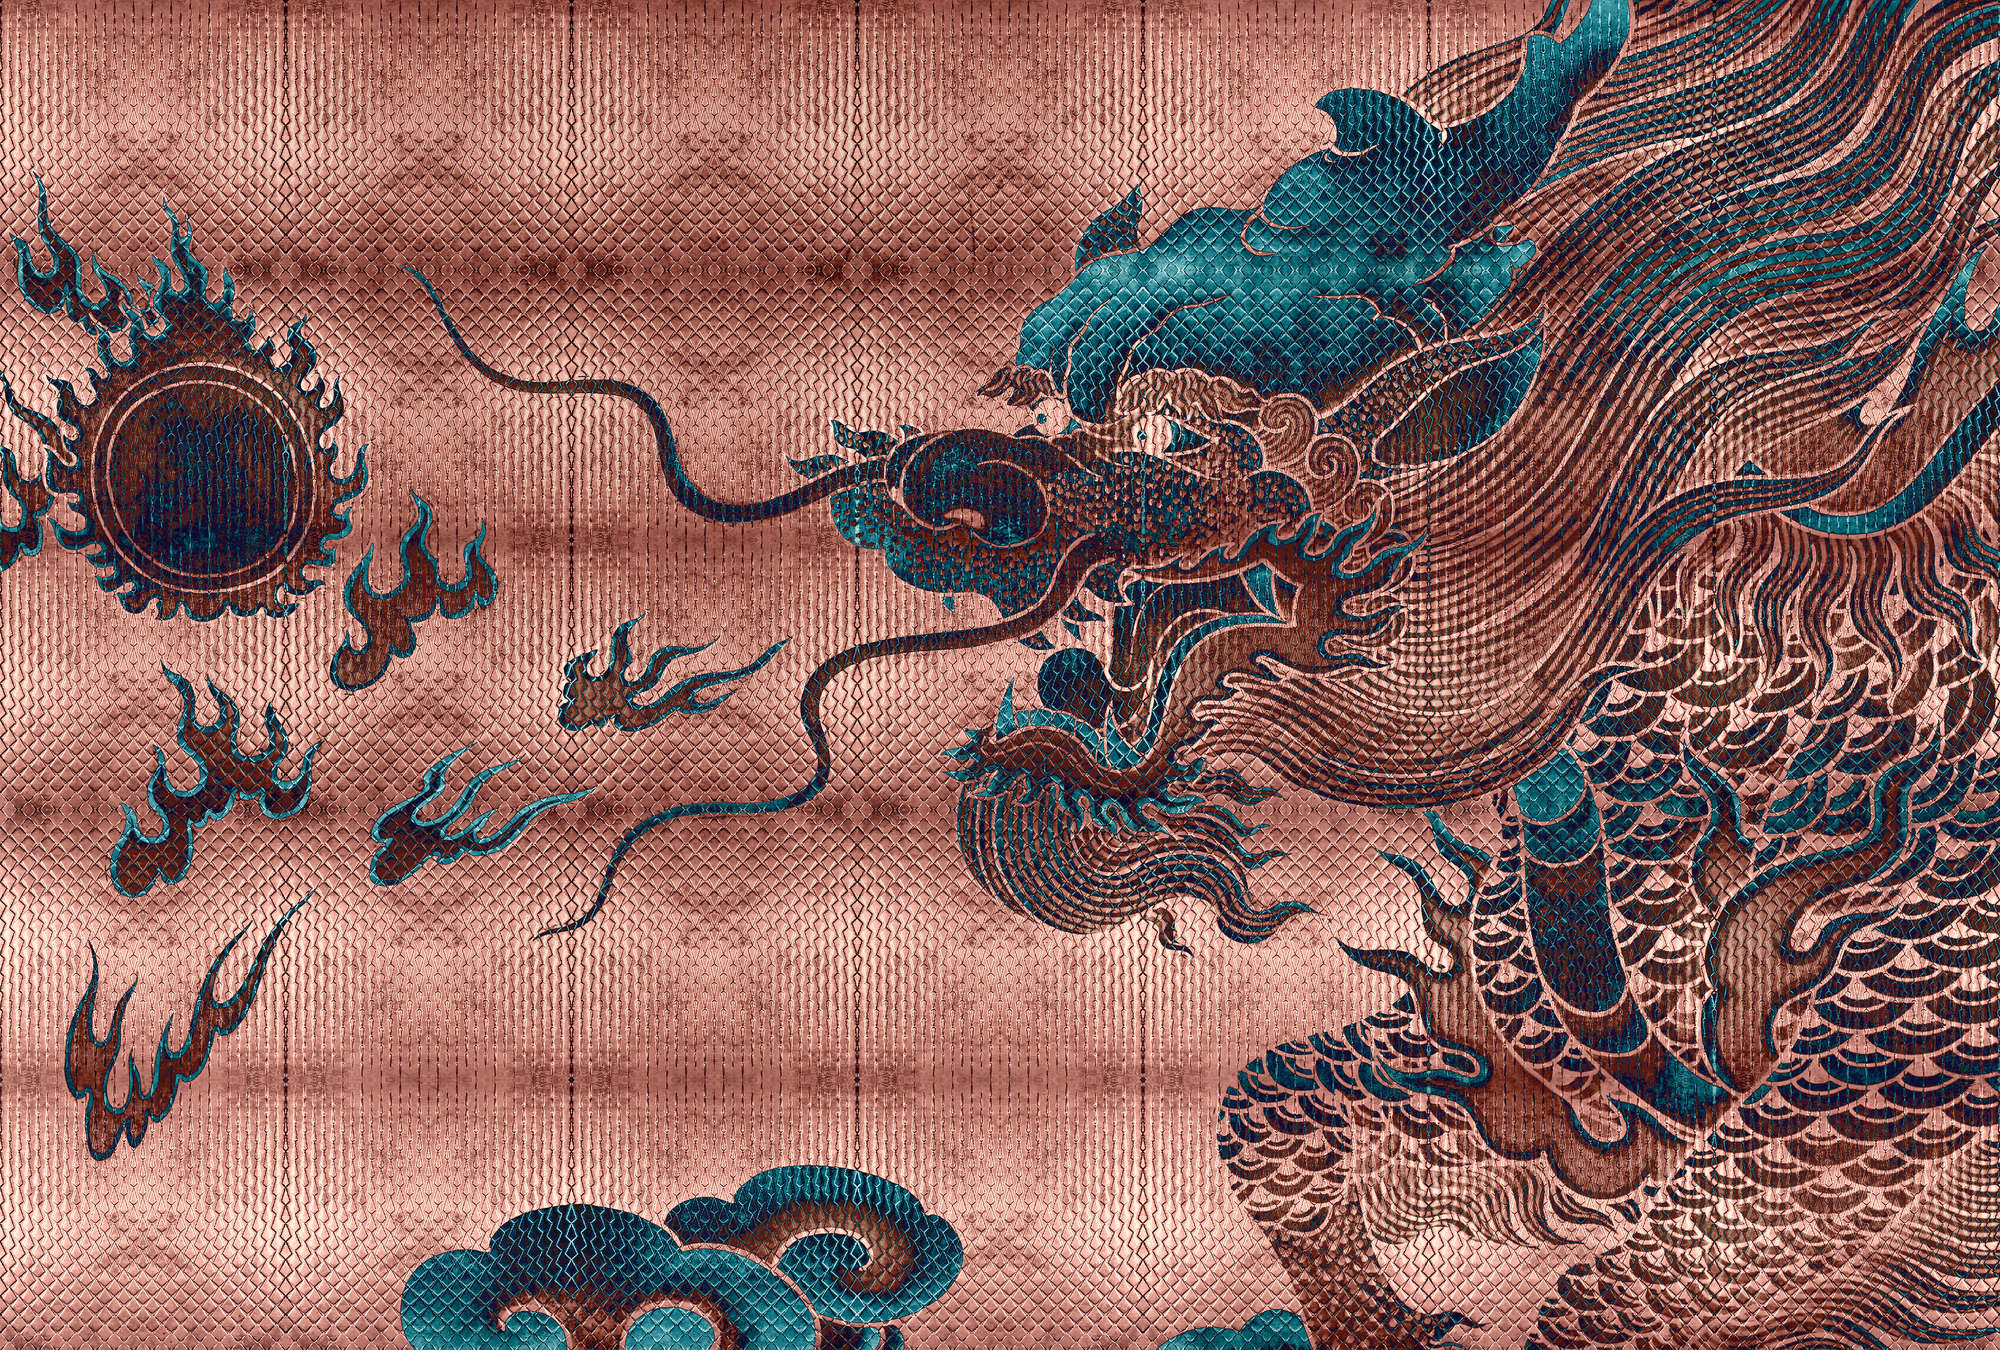             Shenzen 1 - wall mural dragon Asian Syle with metallic colours
        